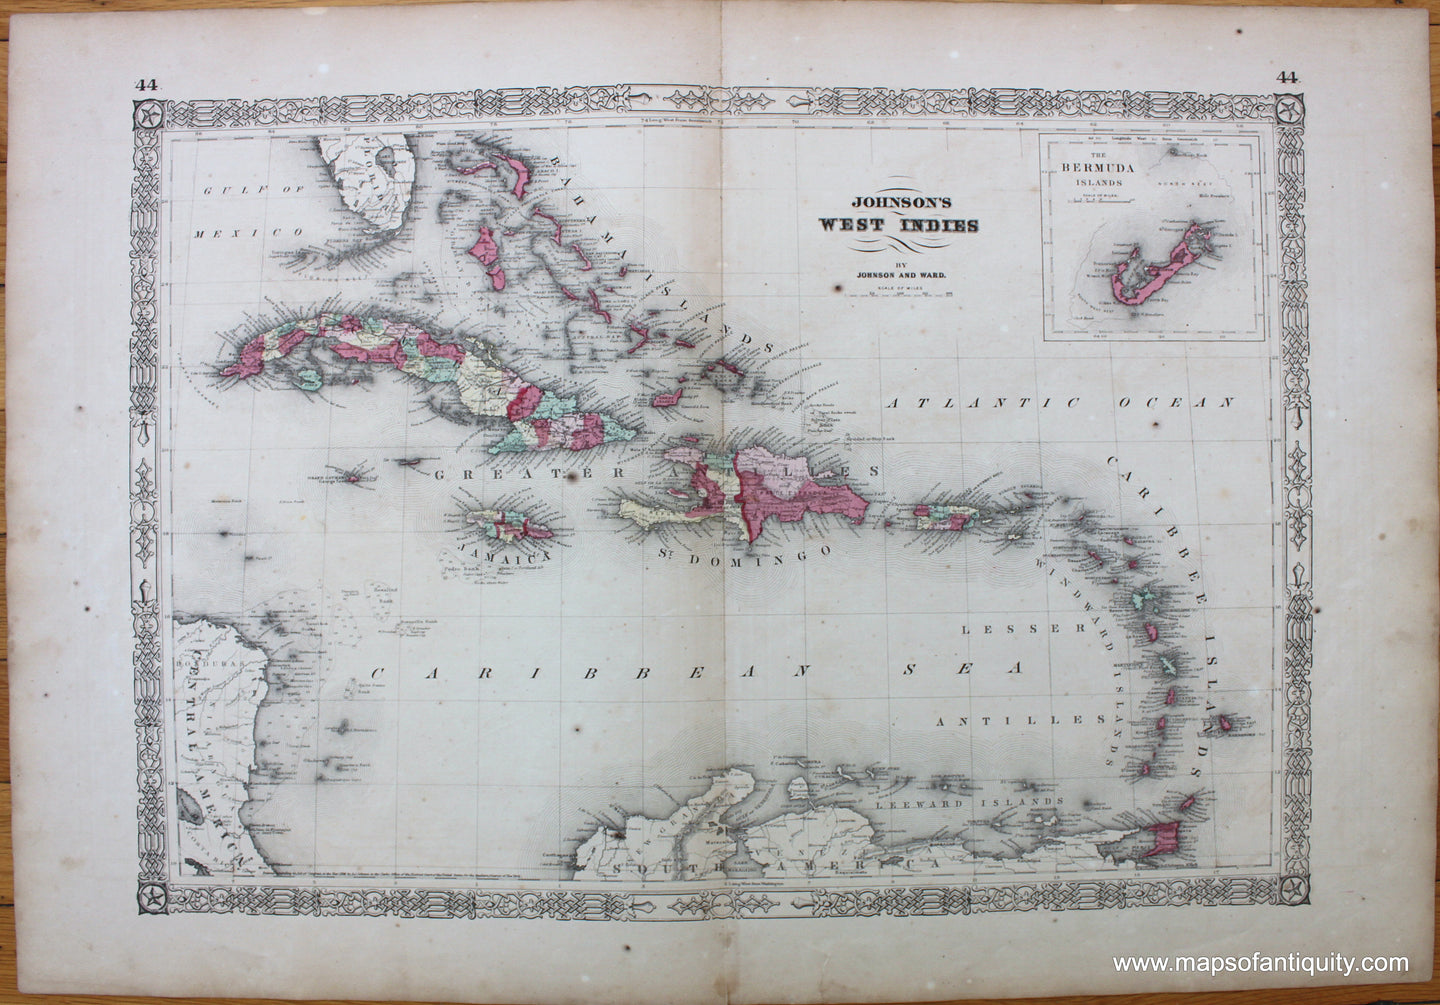 Antique-Map-West-Indies-Johnson-Ward-1864-Caribbean-1860s-1800s-19th-century